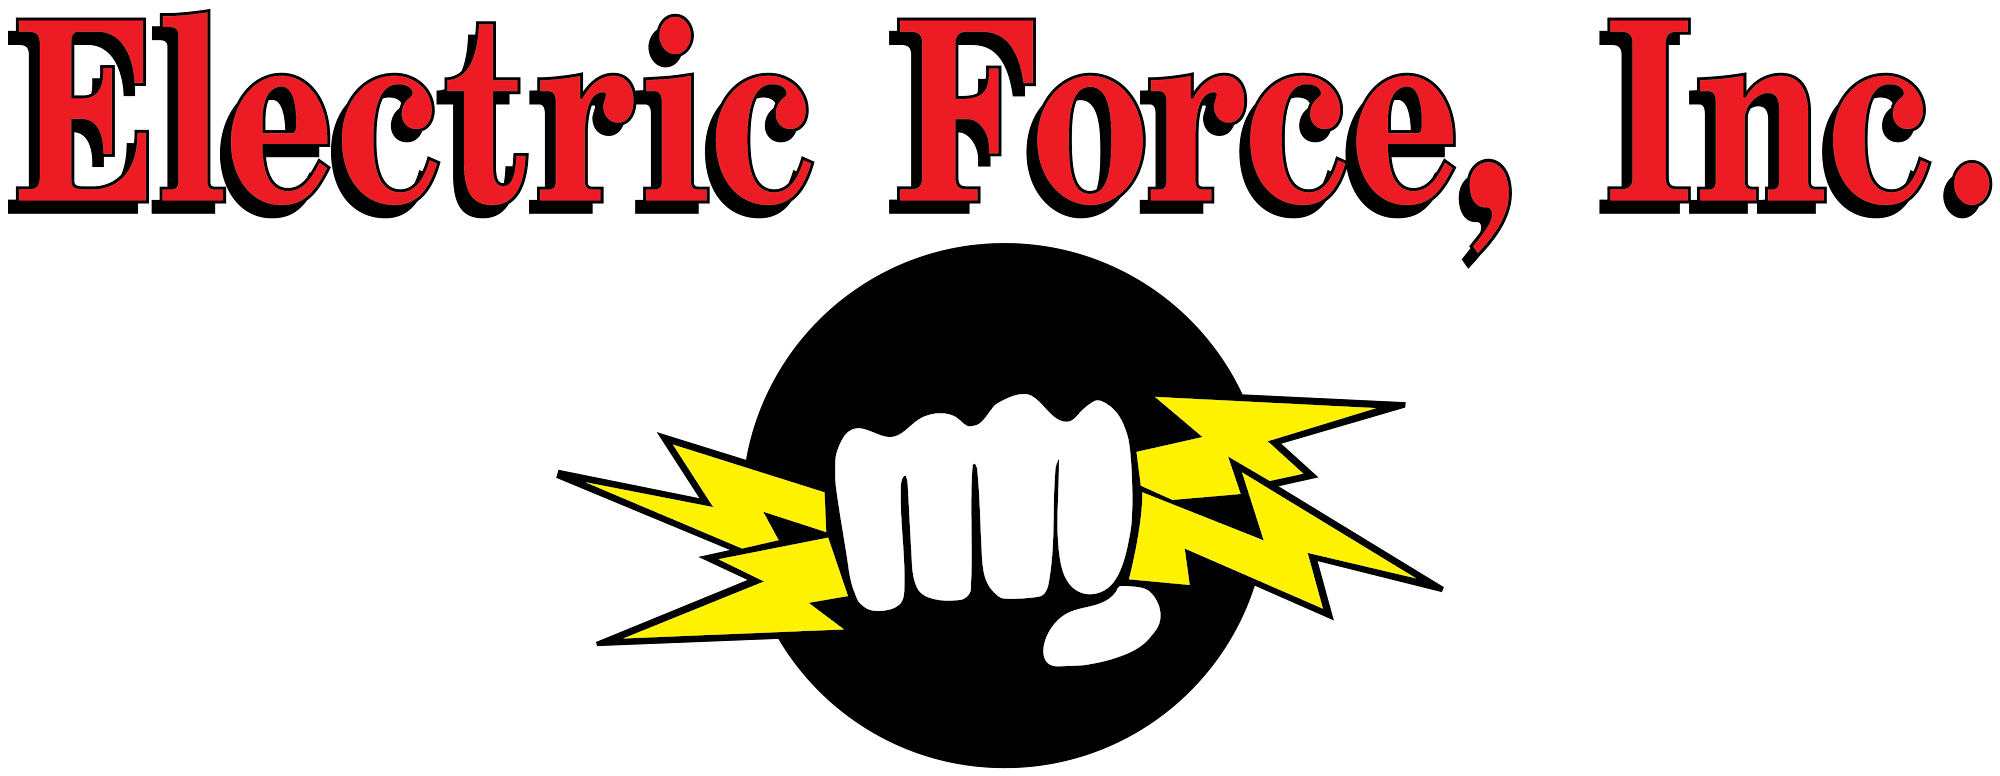 Electric Force, Inc